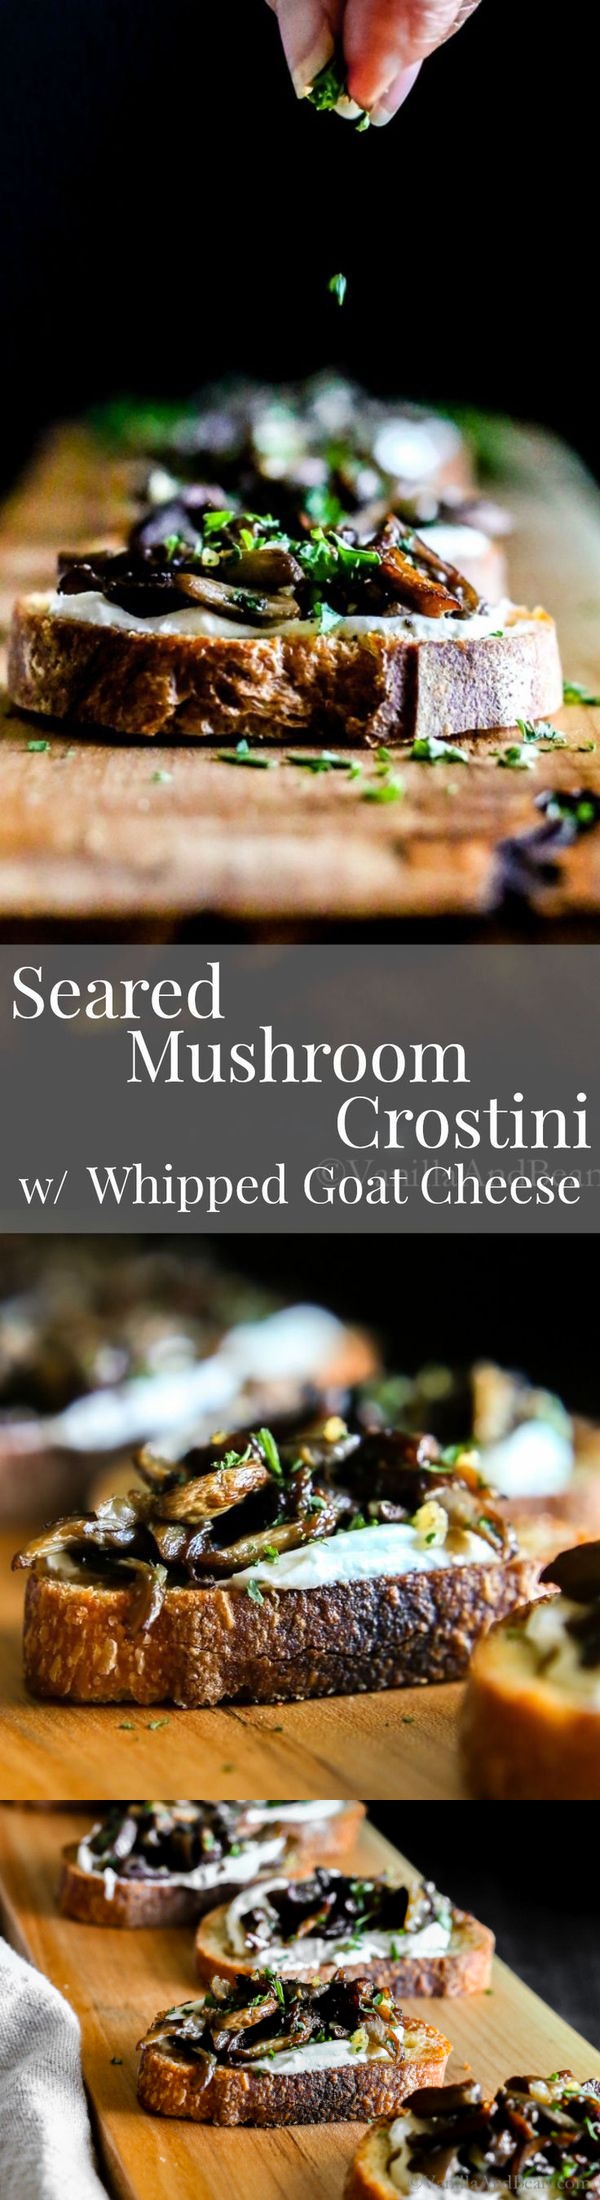 Seared Mushroom Crostini with Herb-Whipped Goat Cheese